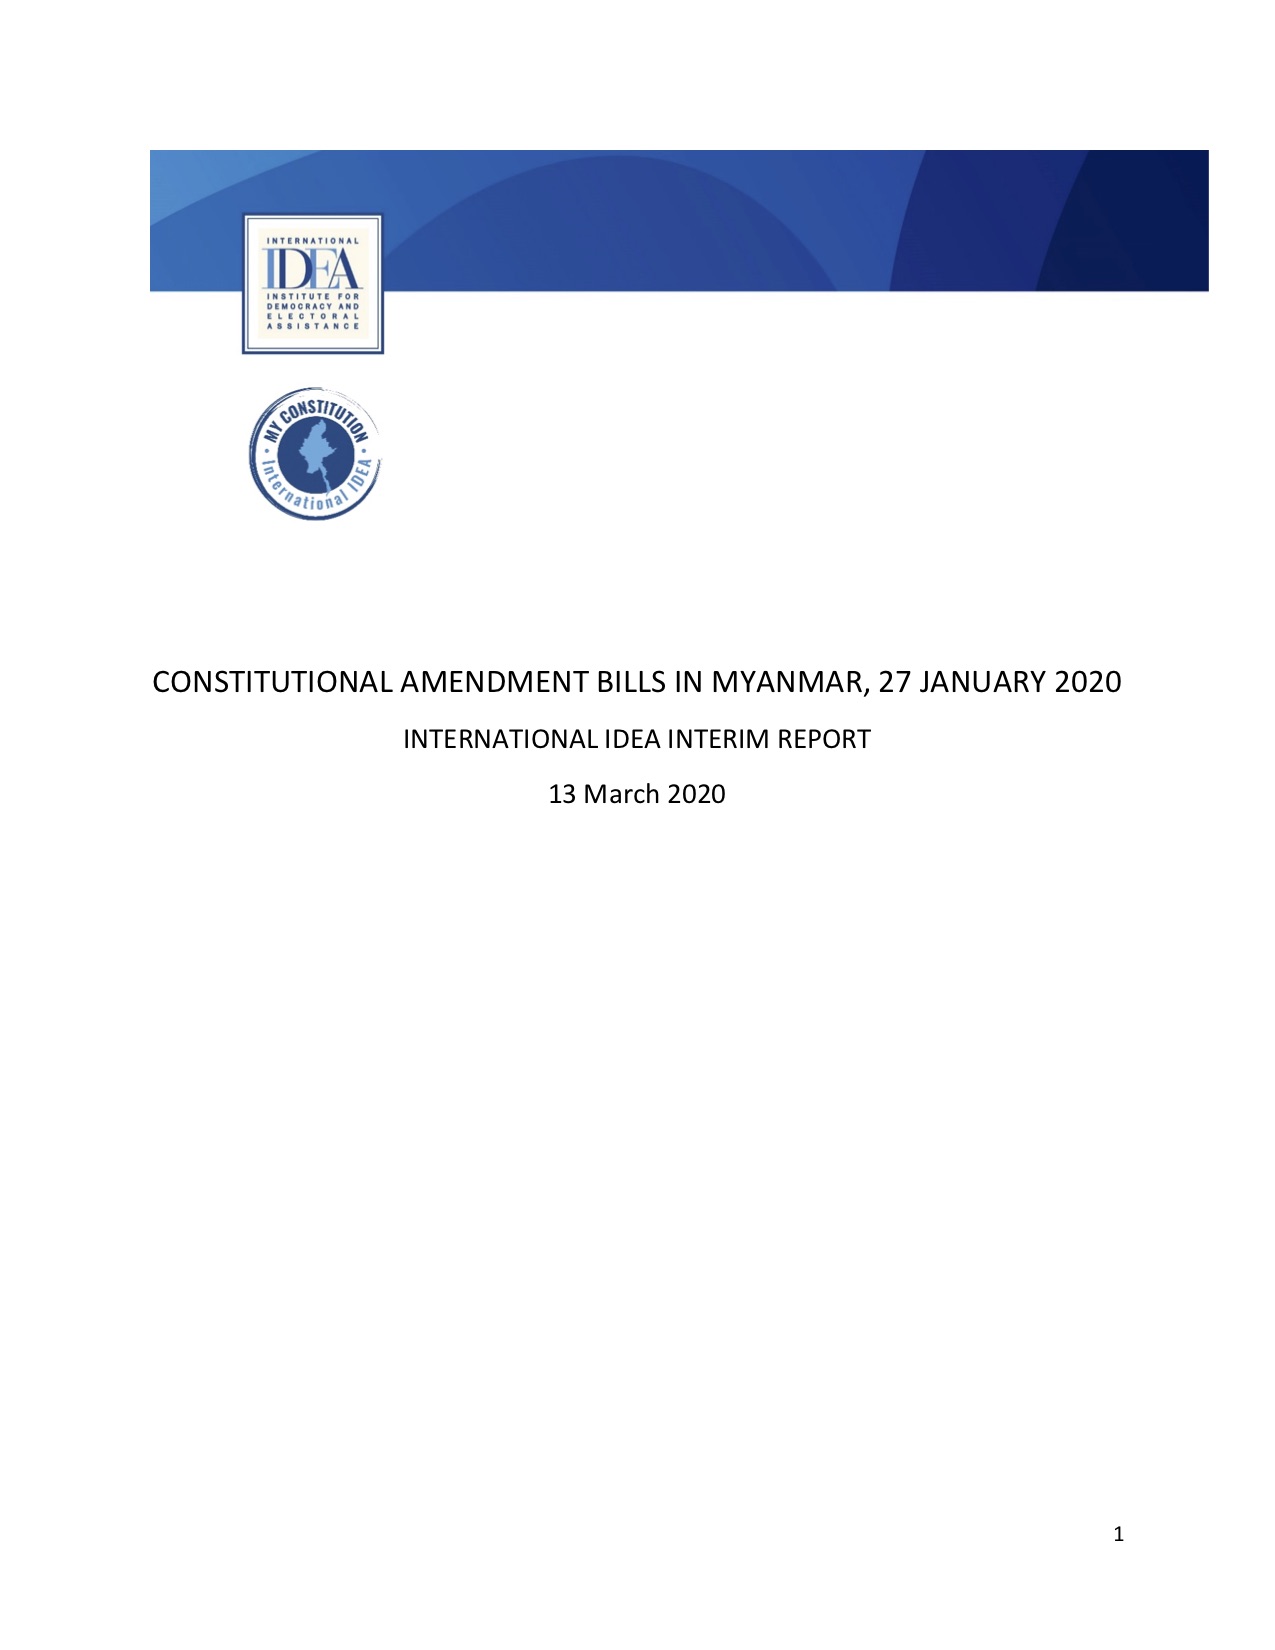 Constitutional Amendment Bills in Myanamar, 27 January 2020: International IDEA Interim Report